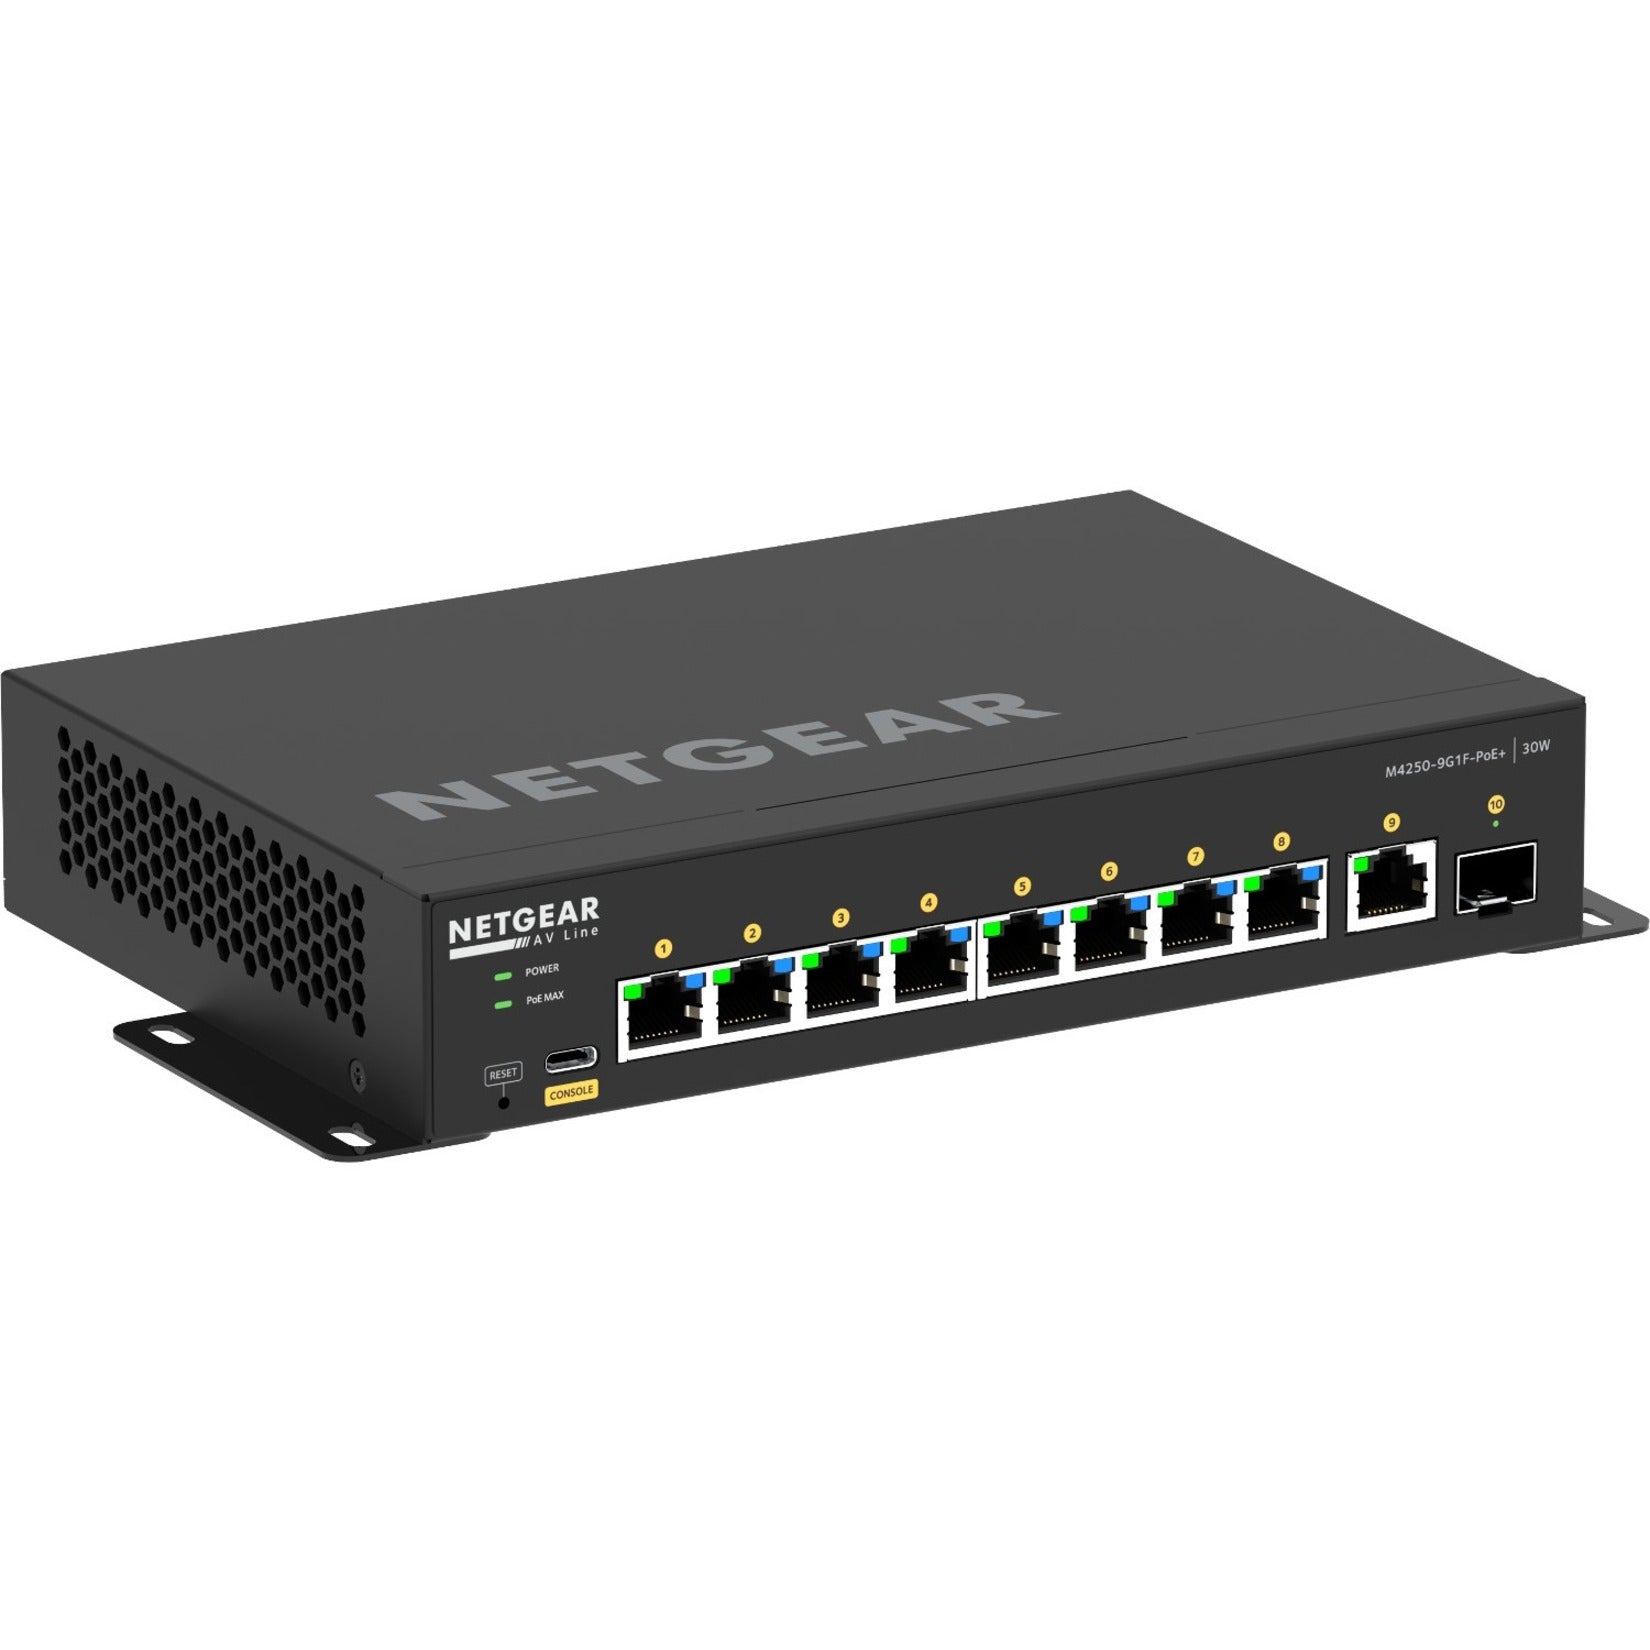 Netgear GSM4210PD-100NAS AV Line M4250 Ethernet Switch, 8-Port Gigabit PoE+ with 110W Budget